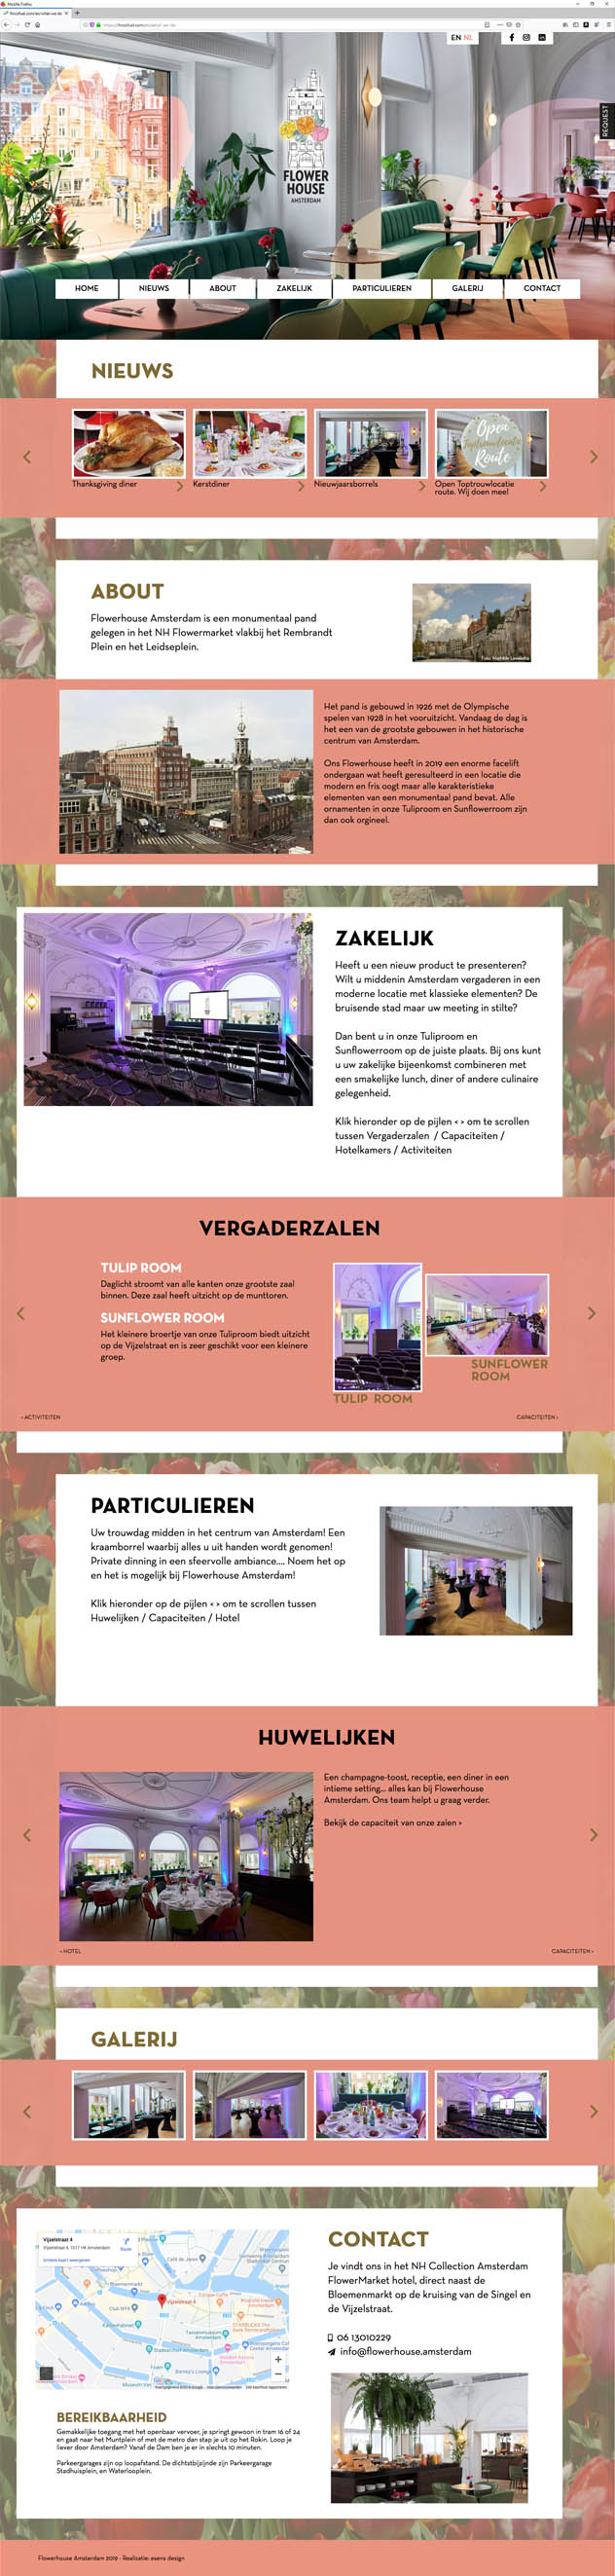 Ontwerp en realisatie Flowerhouse Amsterdam website